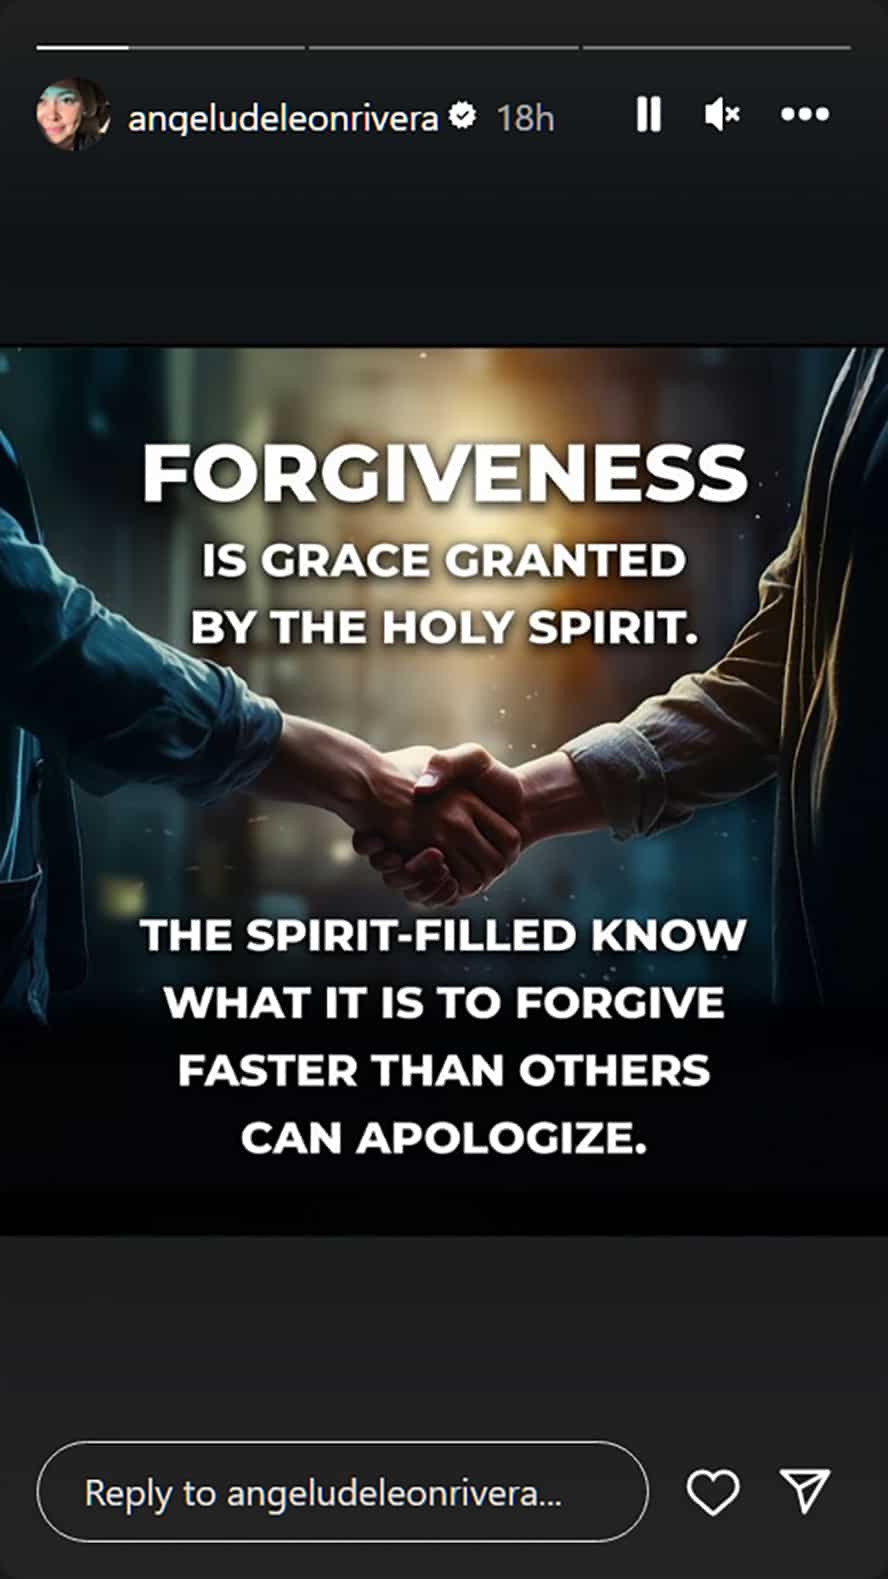 Angelu De Leon, nag-post ng quote ukol pagpapatawad: “Forgive faster than others can apologize”